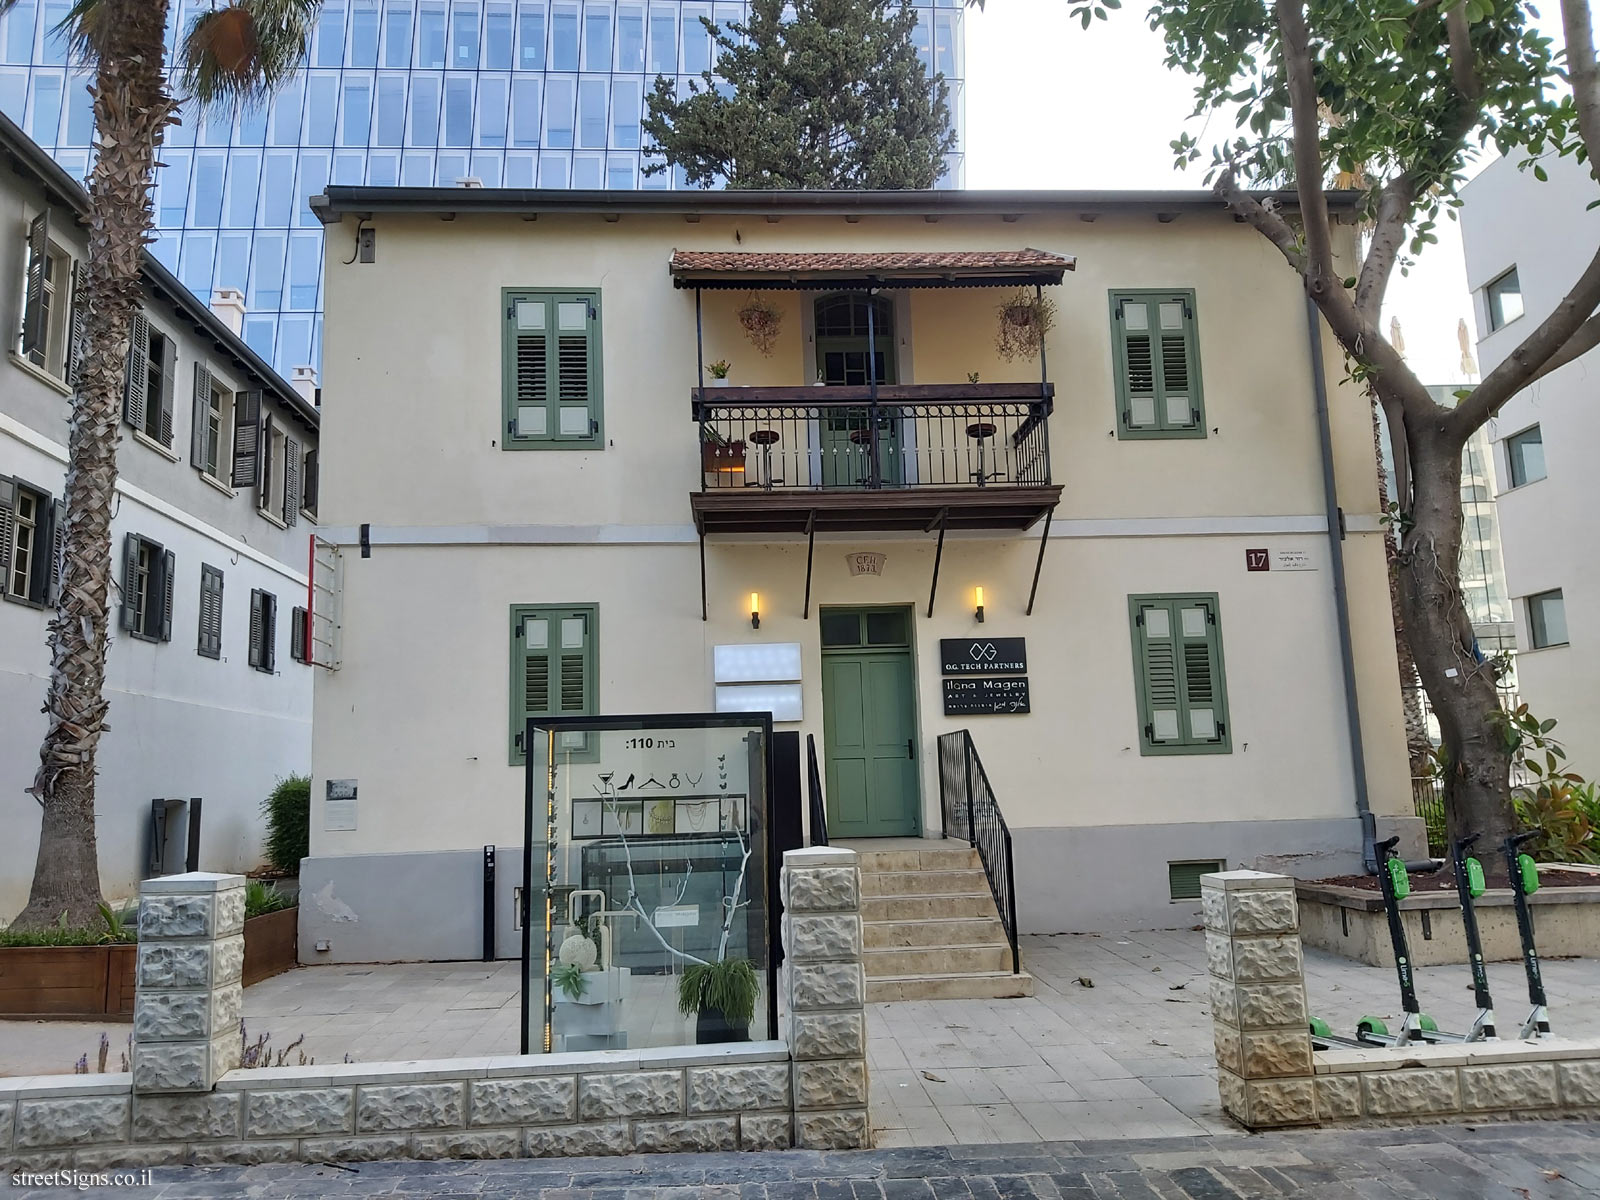 Tel Aviv - Sarona complex - buildings for preservation - Häcker House